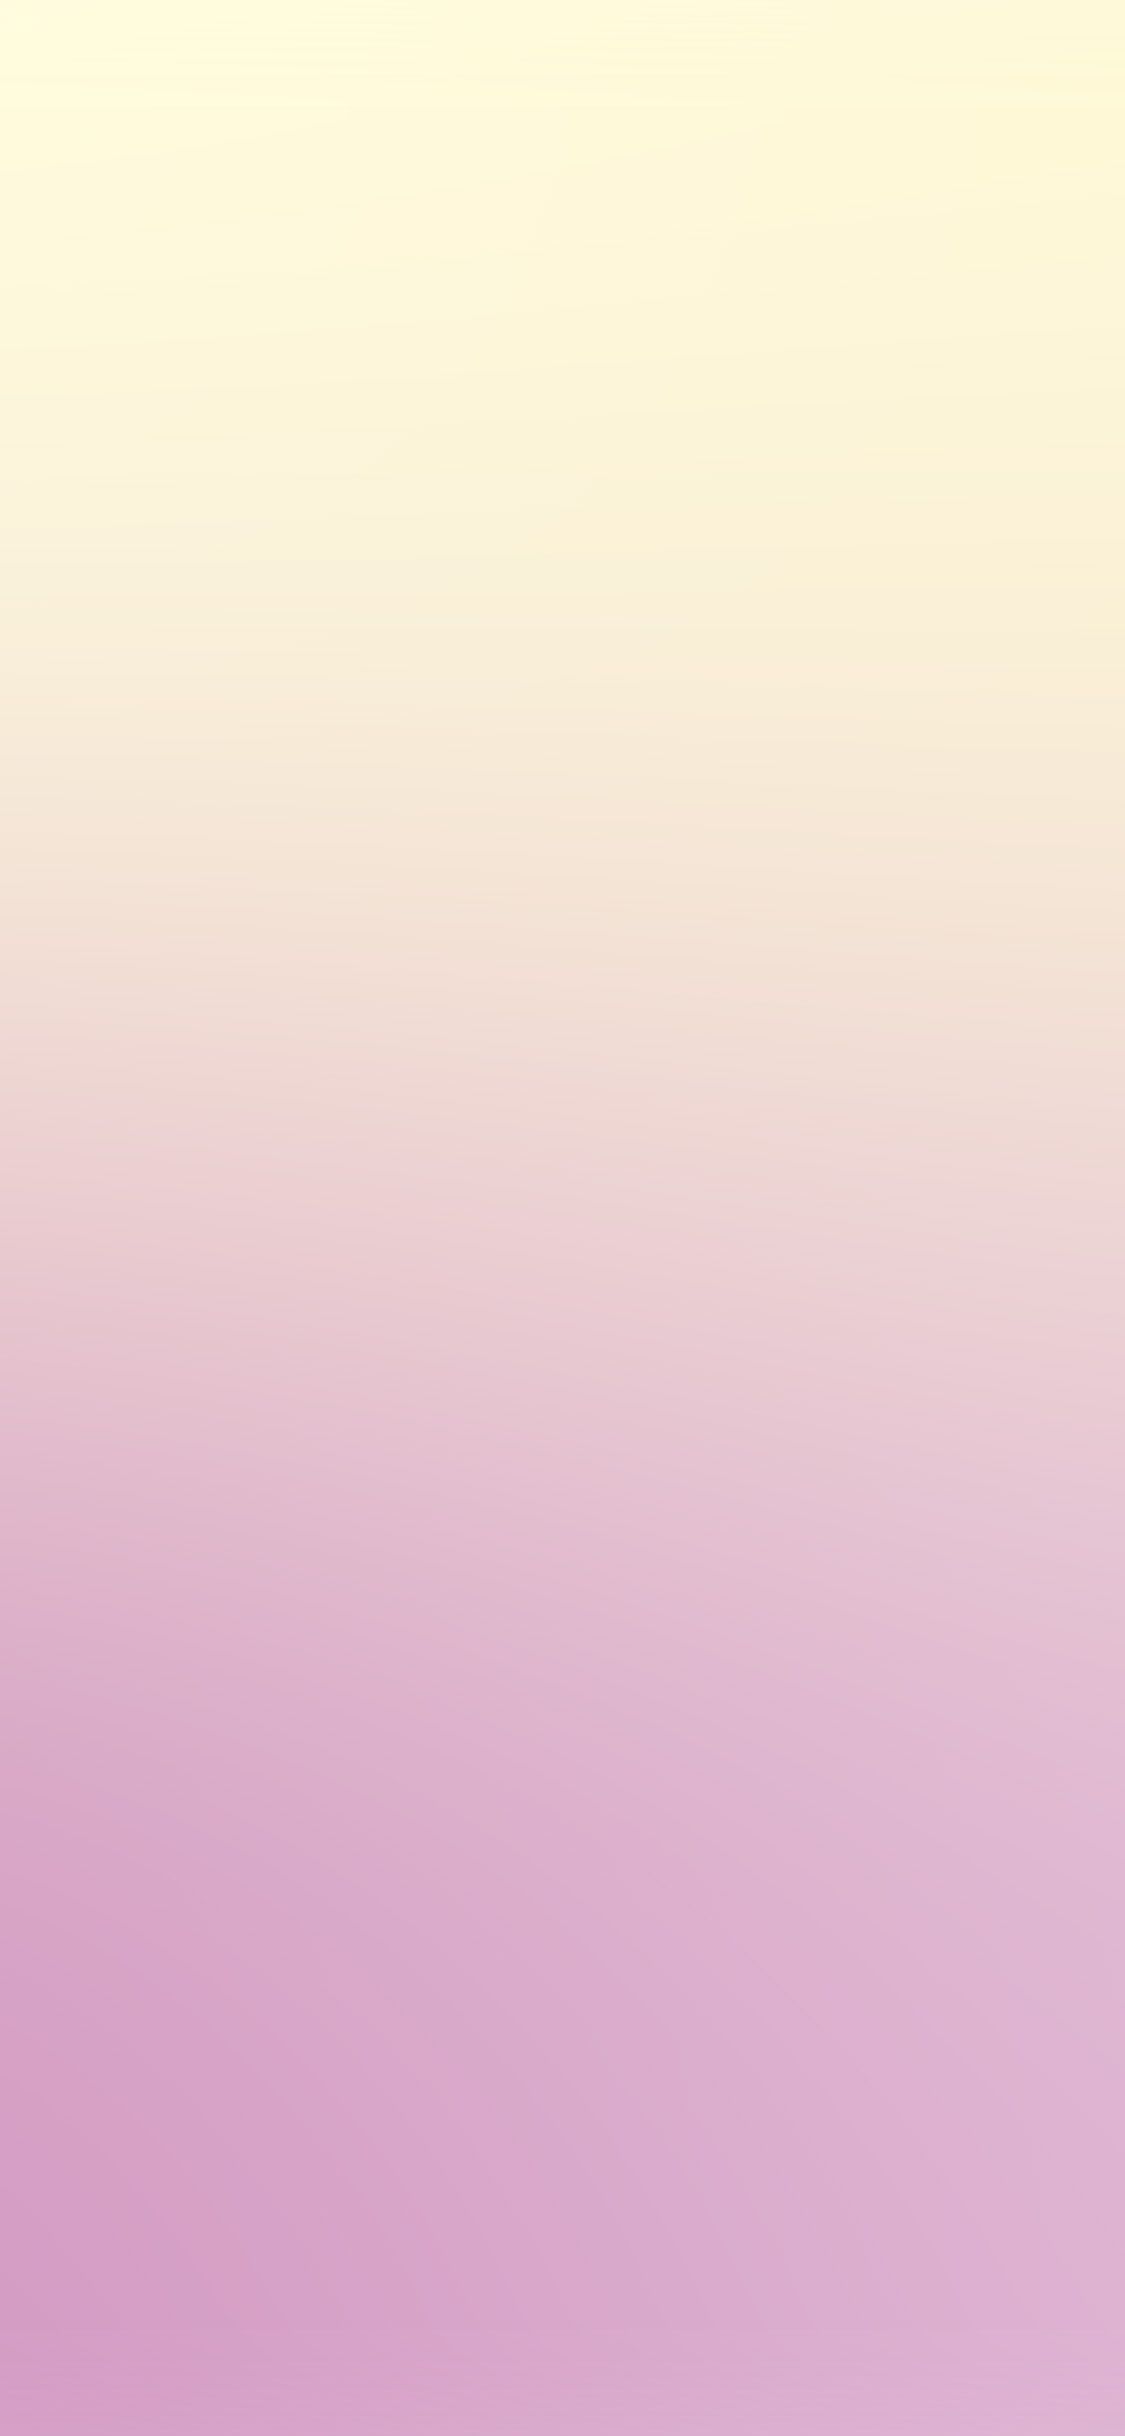 iPhone X wallpaper. pastel pink blur gradation